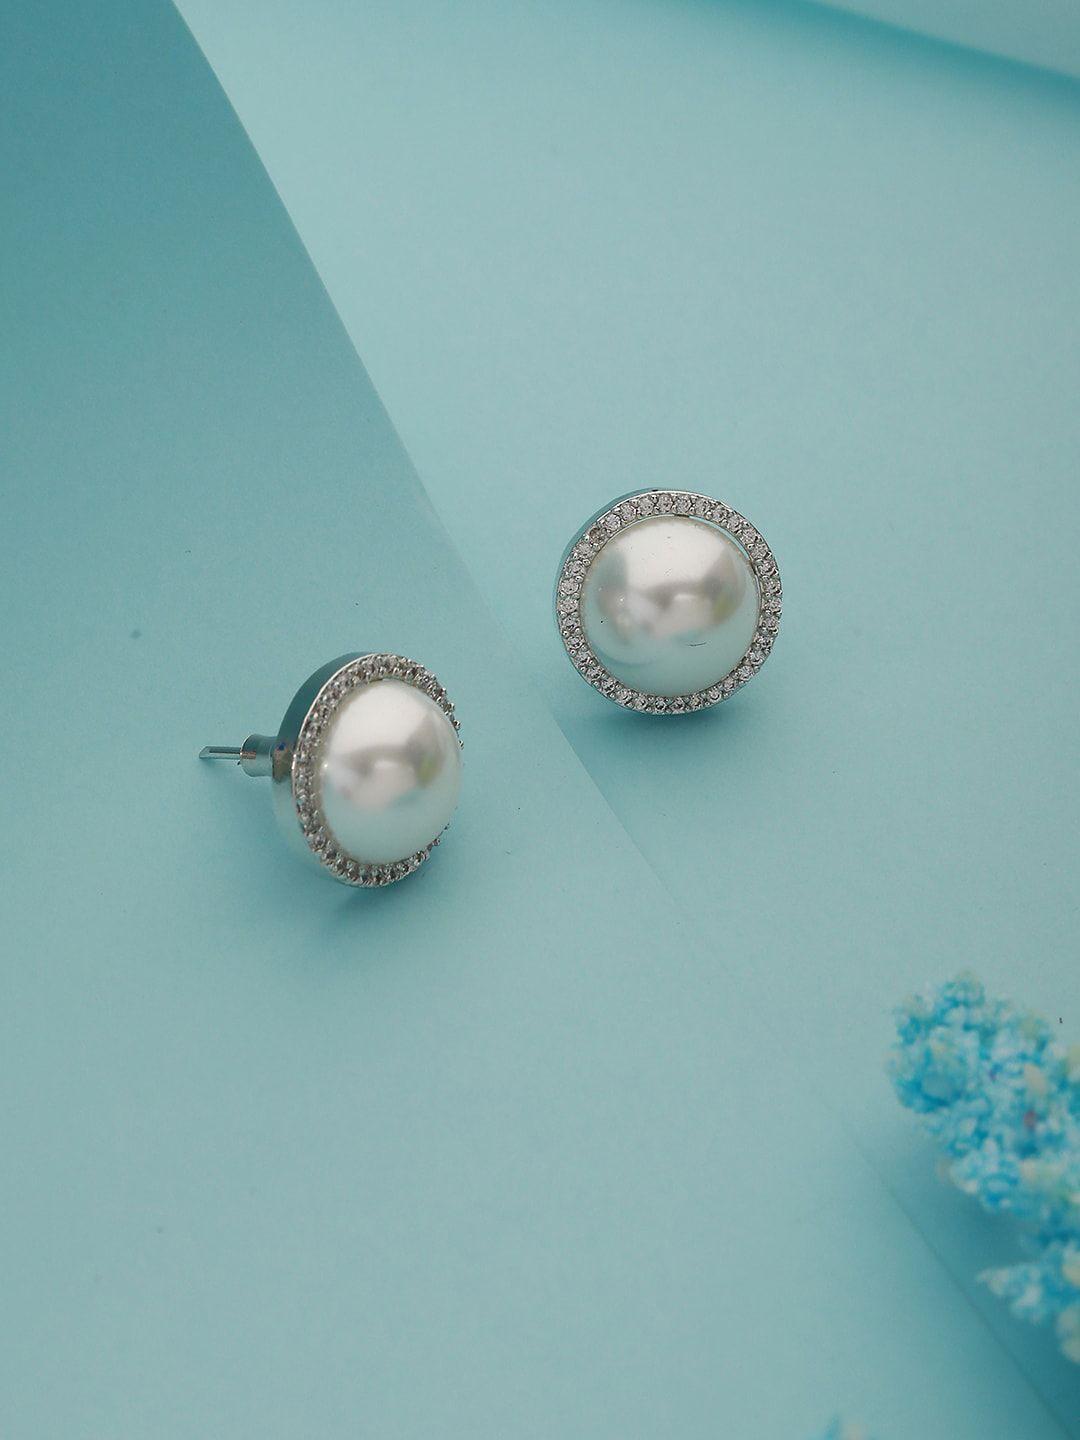 saraf rs jewellery silver-plated teardrop shaped studs earrings